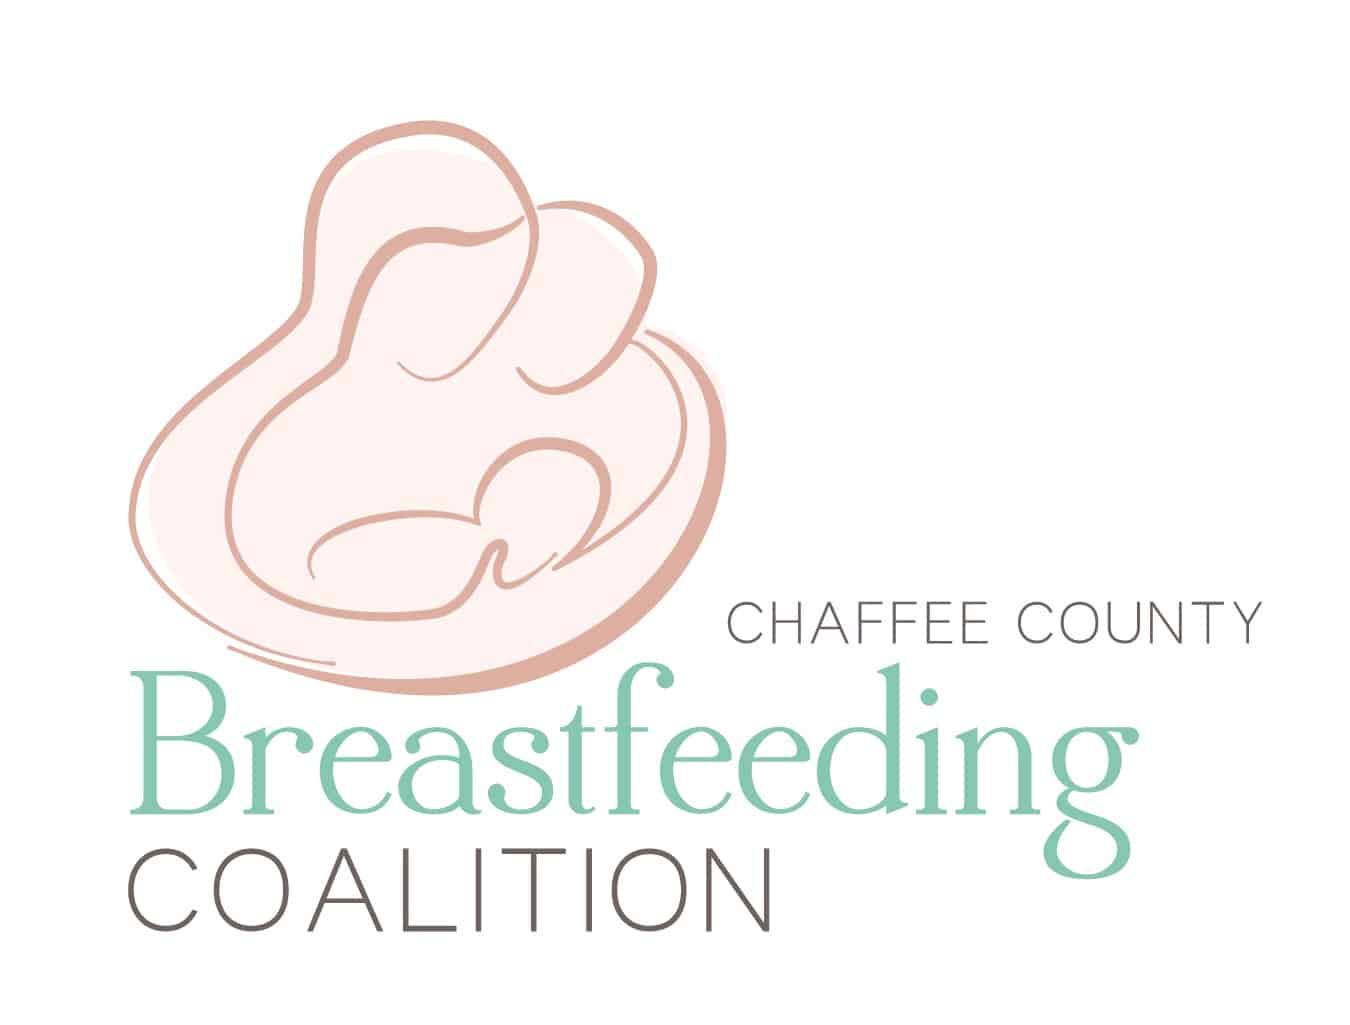 Chaffee County Breastfeeding Coalition